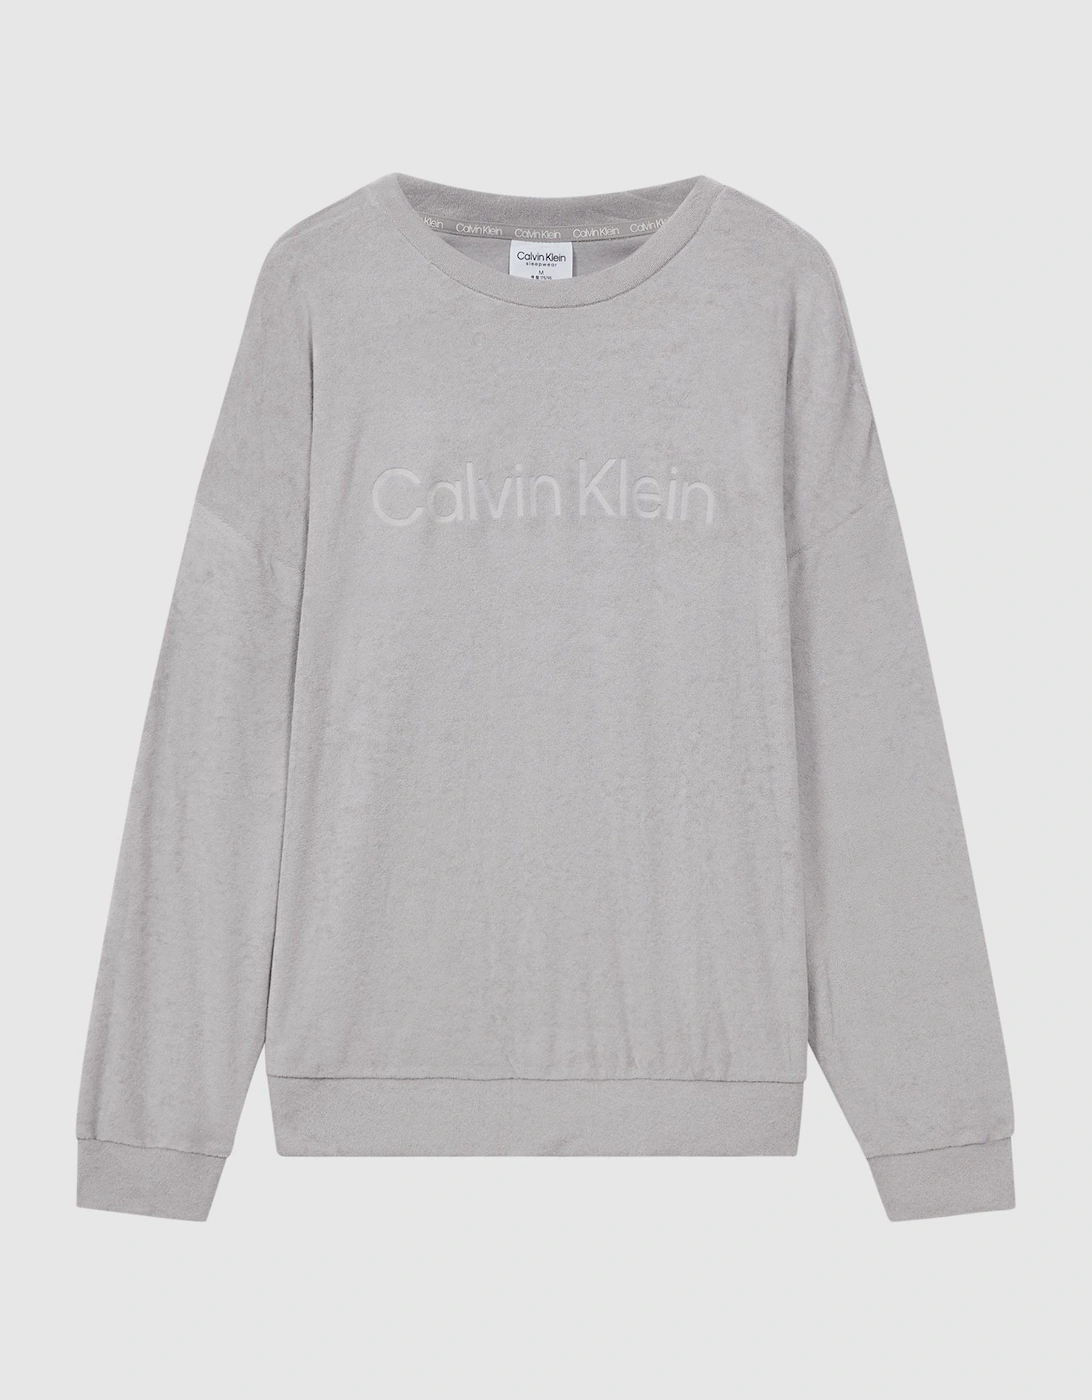 Calvin Klein Underwear Terry Towelling Crew Neck Sweatshirt, 2 of 1